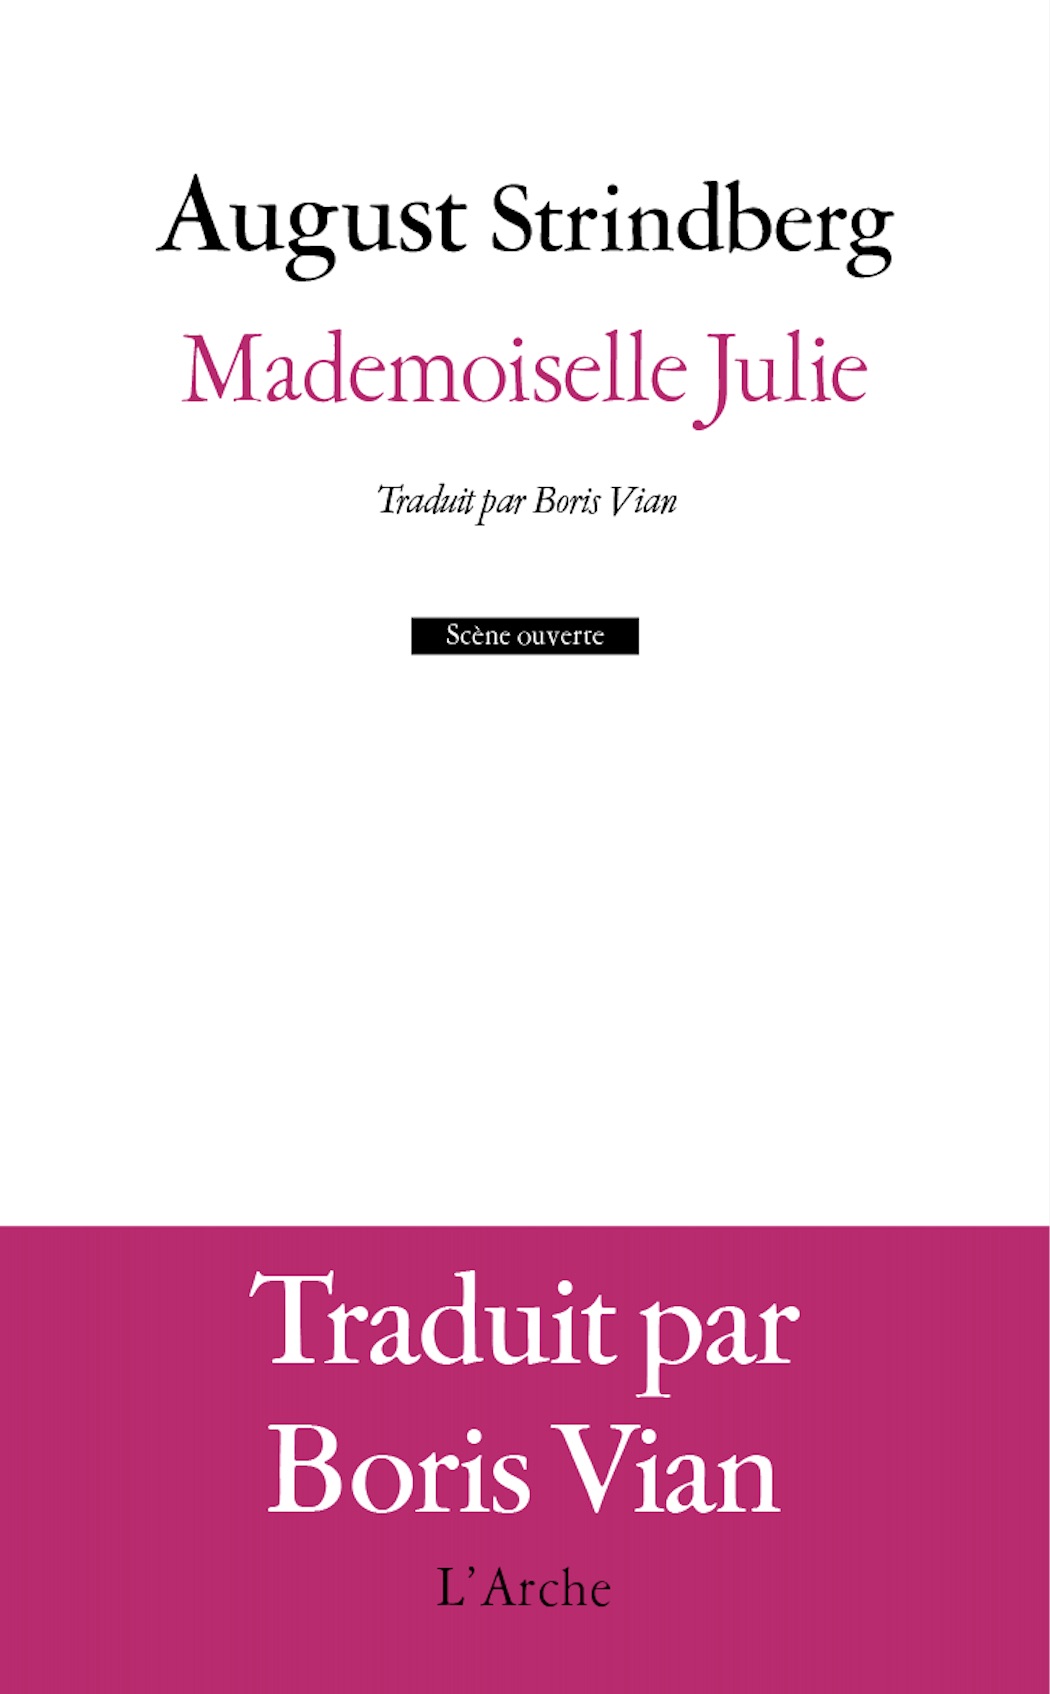 Mademoiselle Julie - August Strindberg - L'Arche